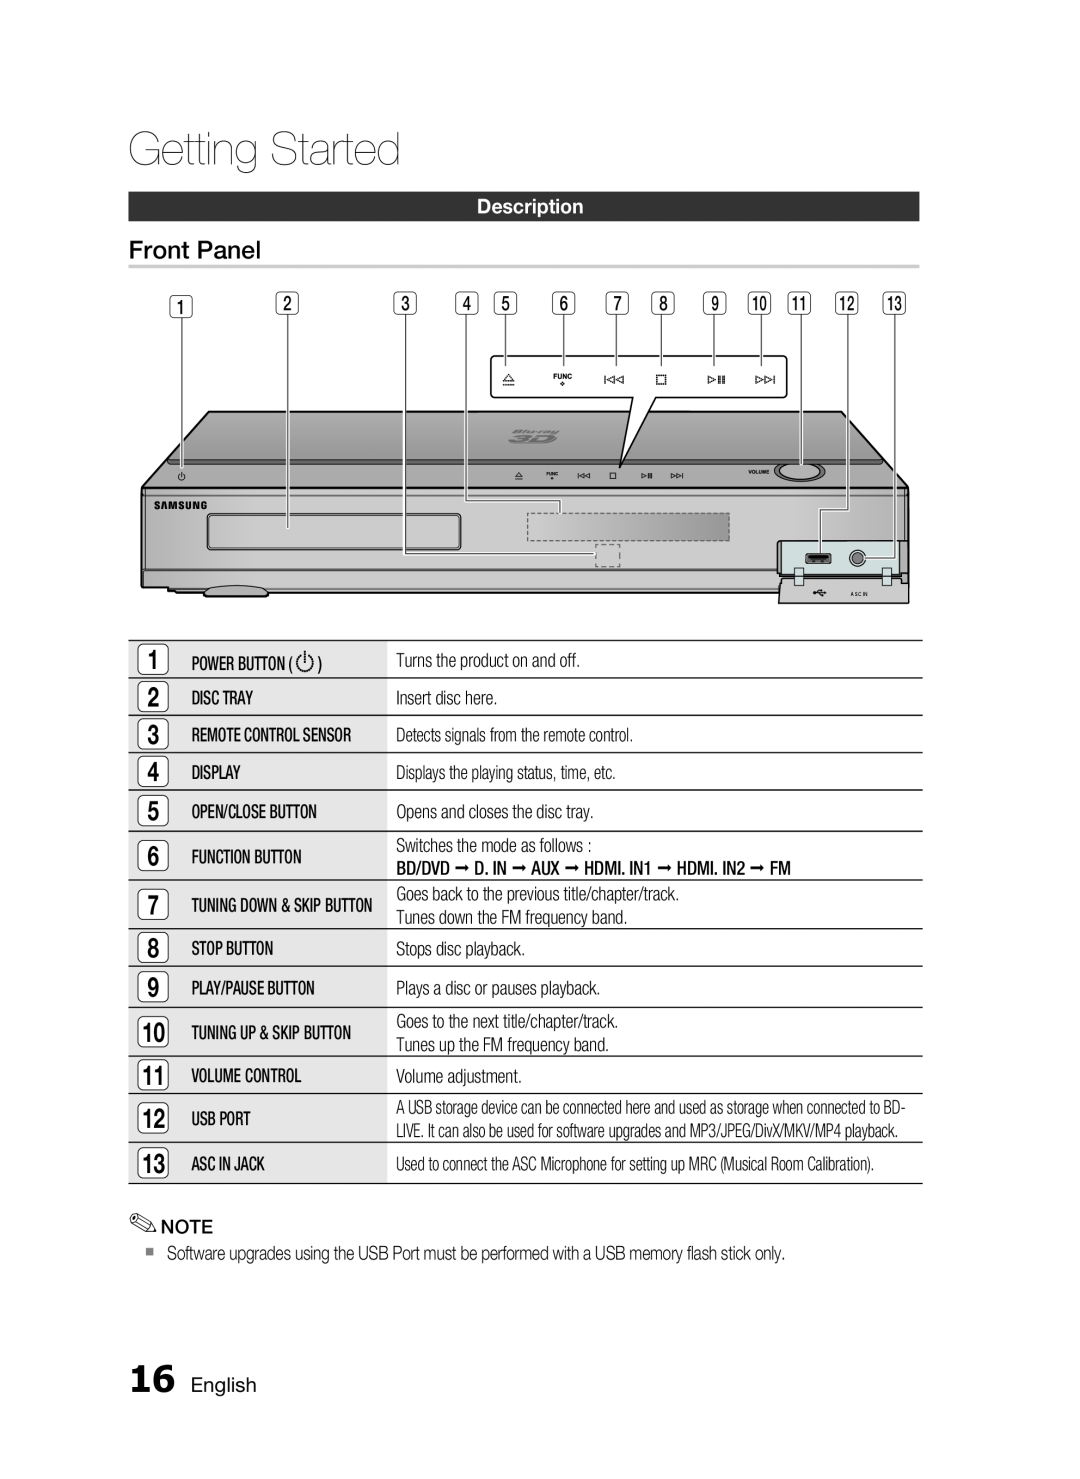 Samsung C6600 user manual Front Panel, Description, Getting Started 